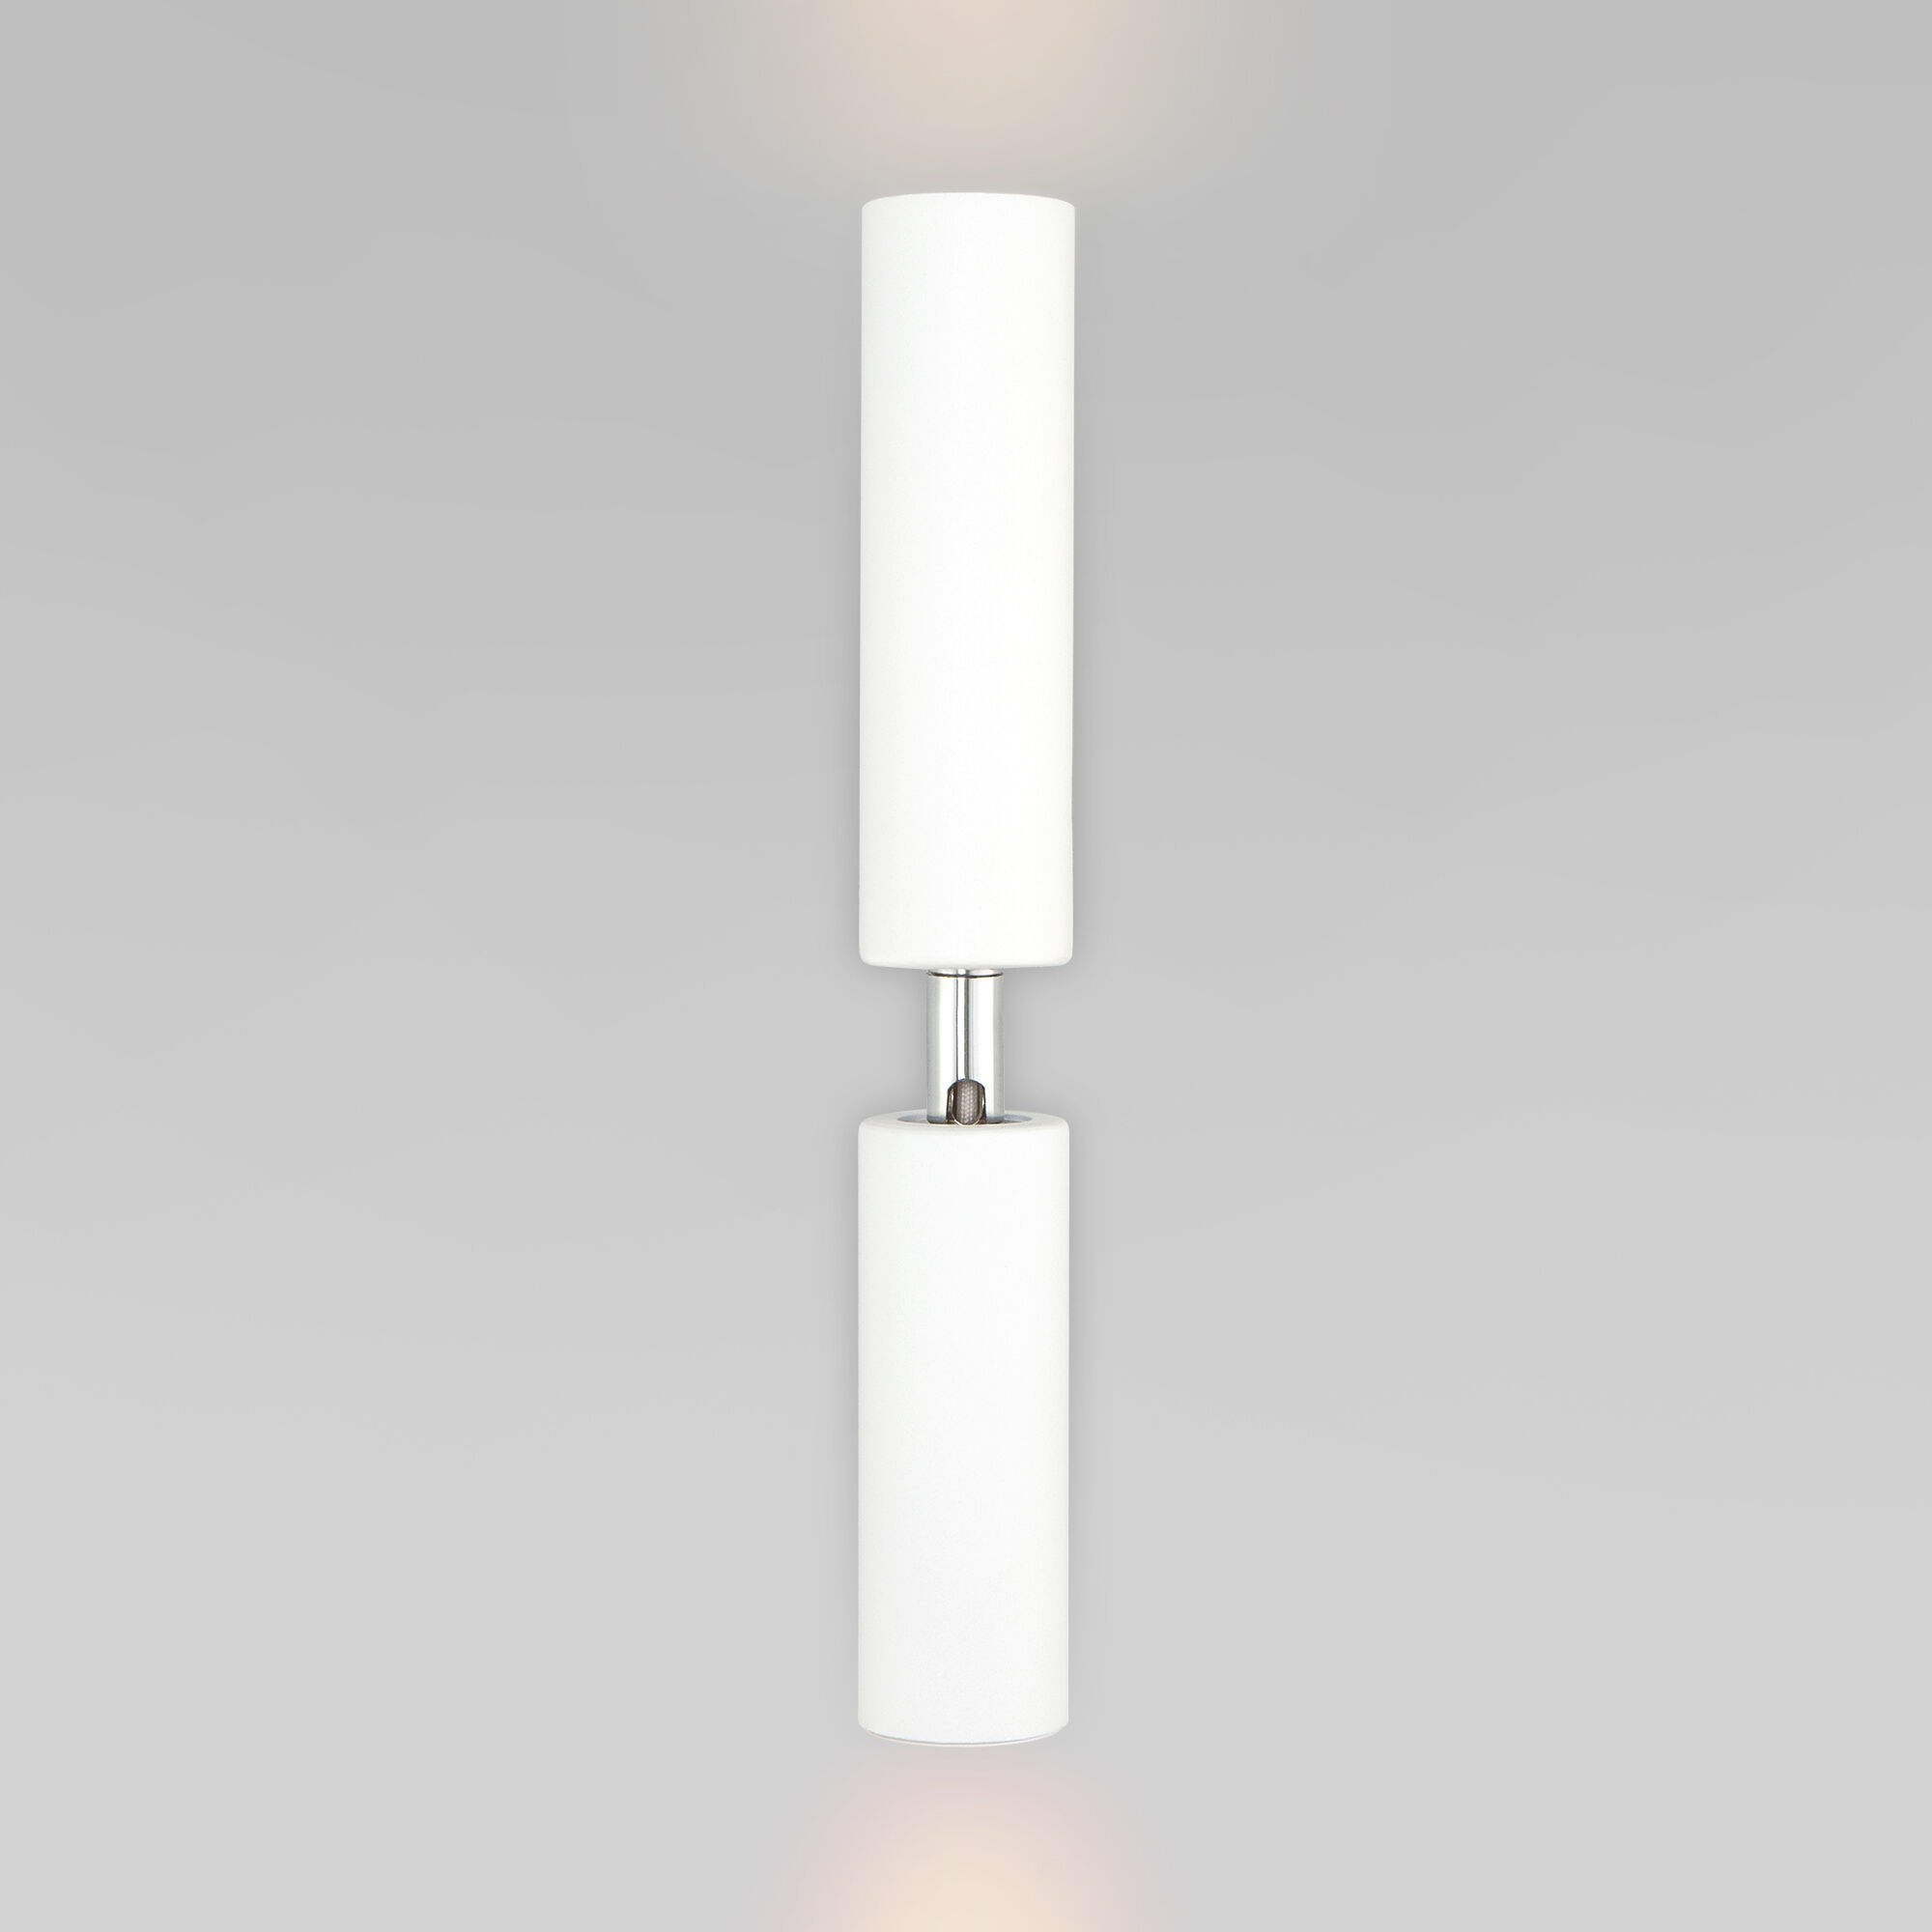 Настенный светильник Eurosvet 40020/1 LED белый